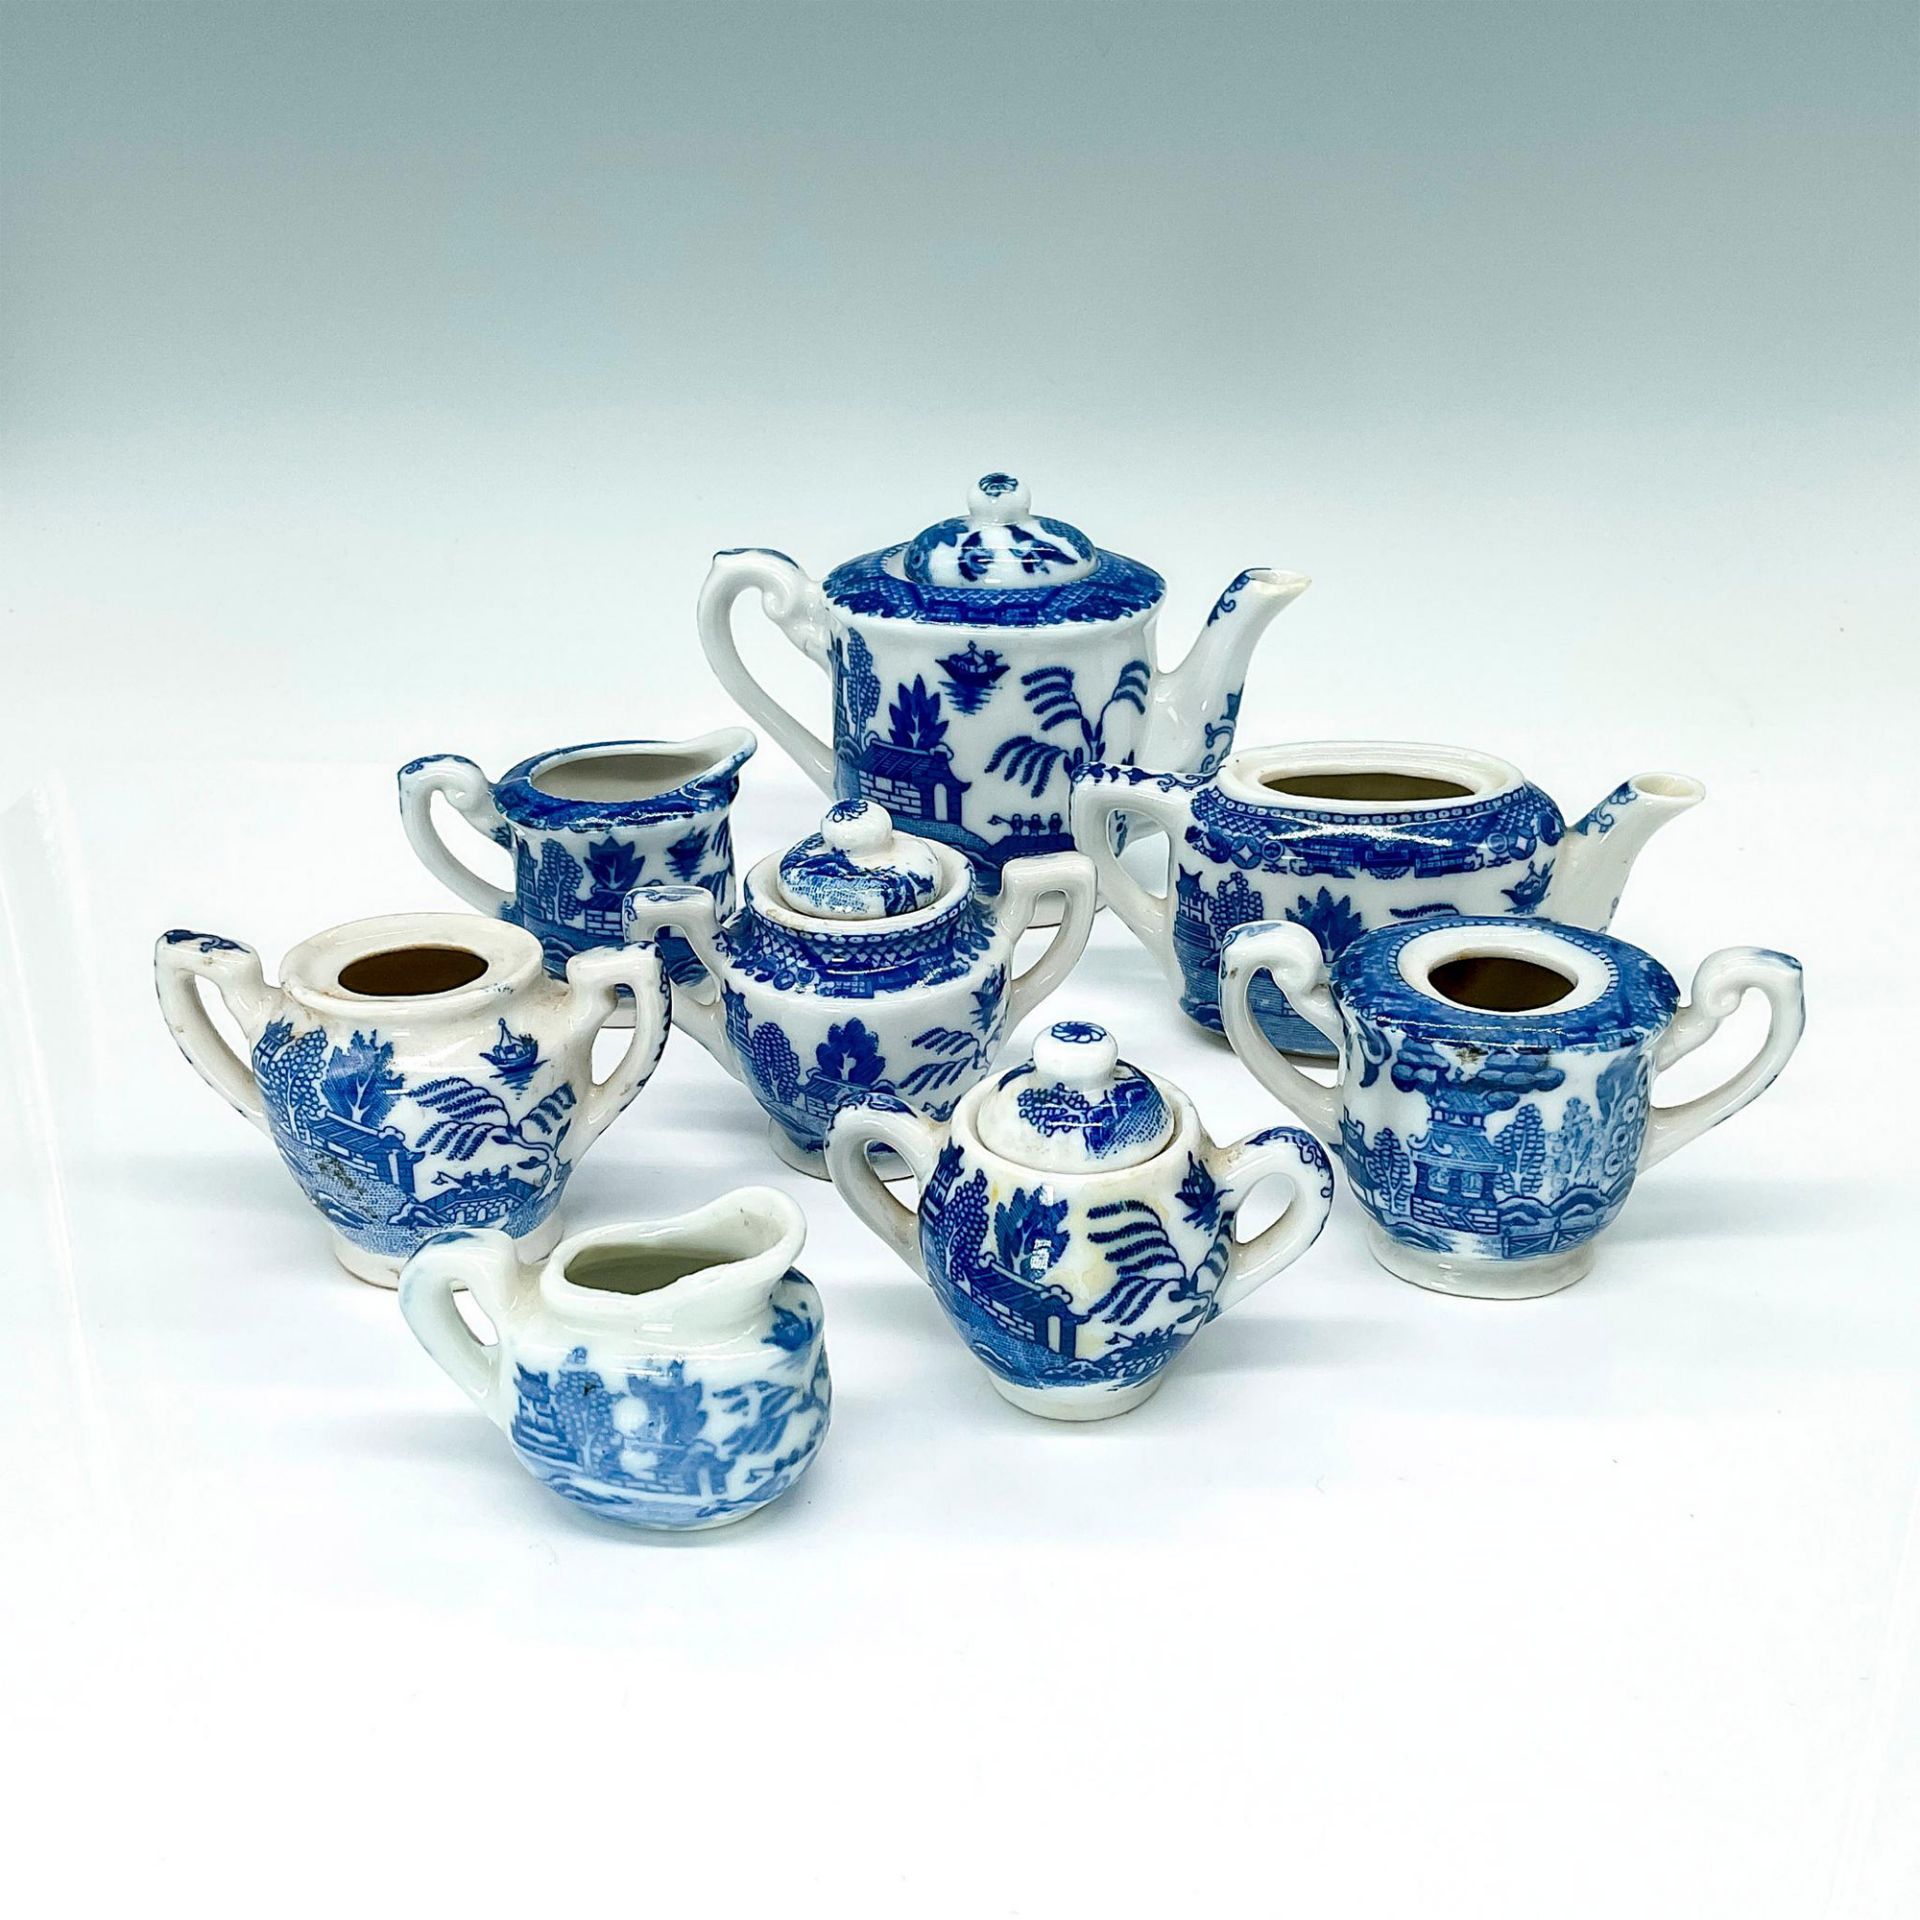 8pc Blue Willow Child's Tea Set Tea Pots and Serving Pieces - Image 2 of 3